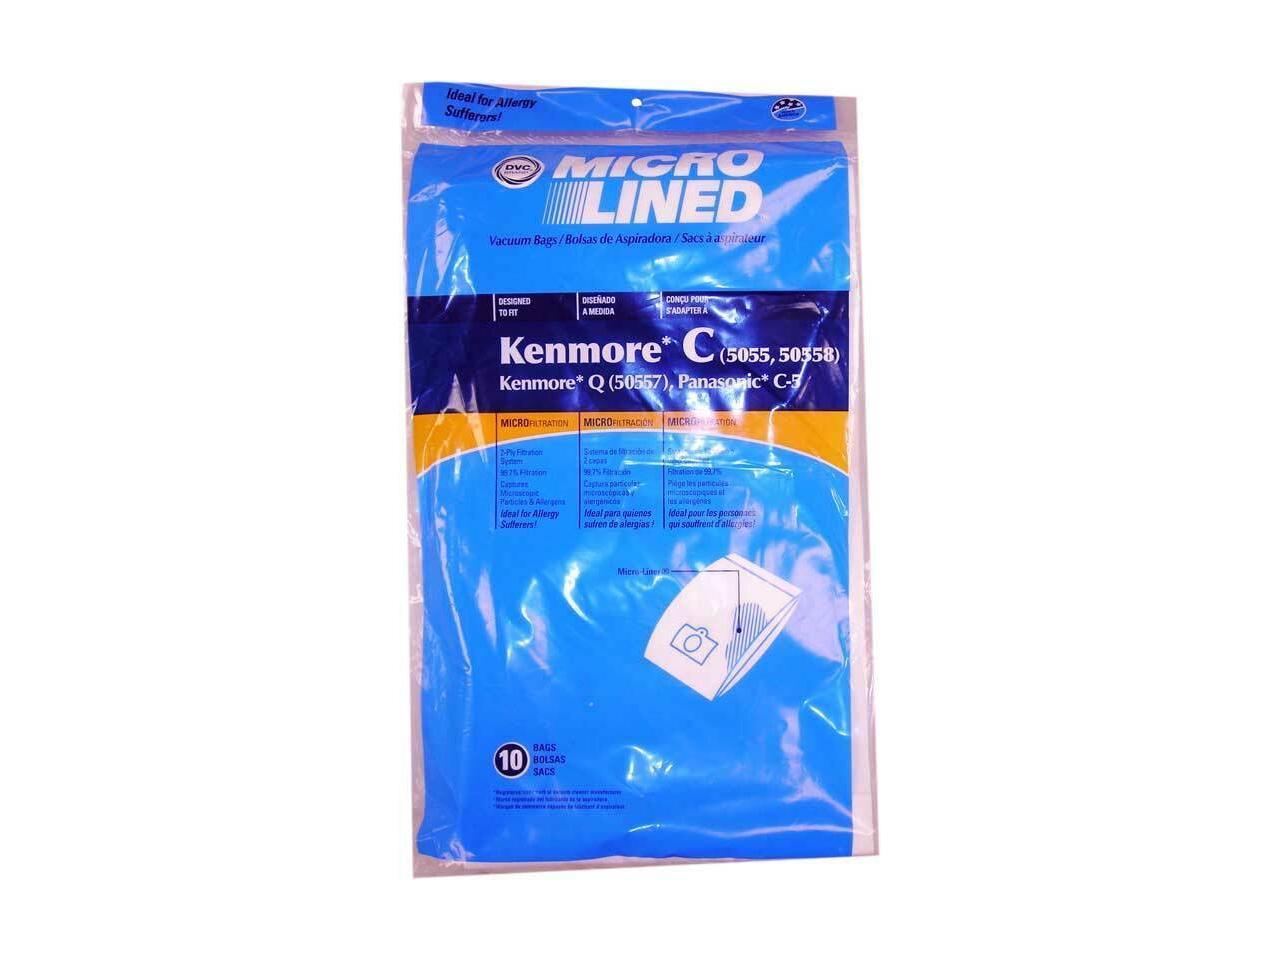 10 For Kenmore Vacuum Cleaner Bags 5055 50557 50558 C 